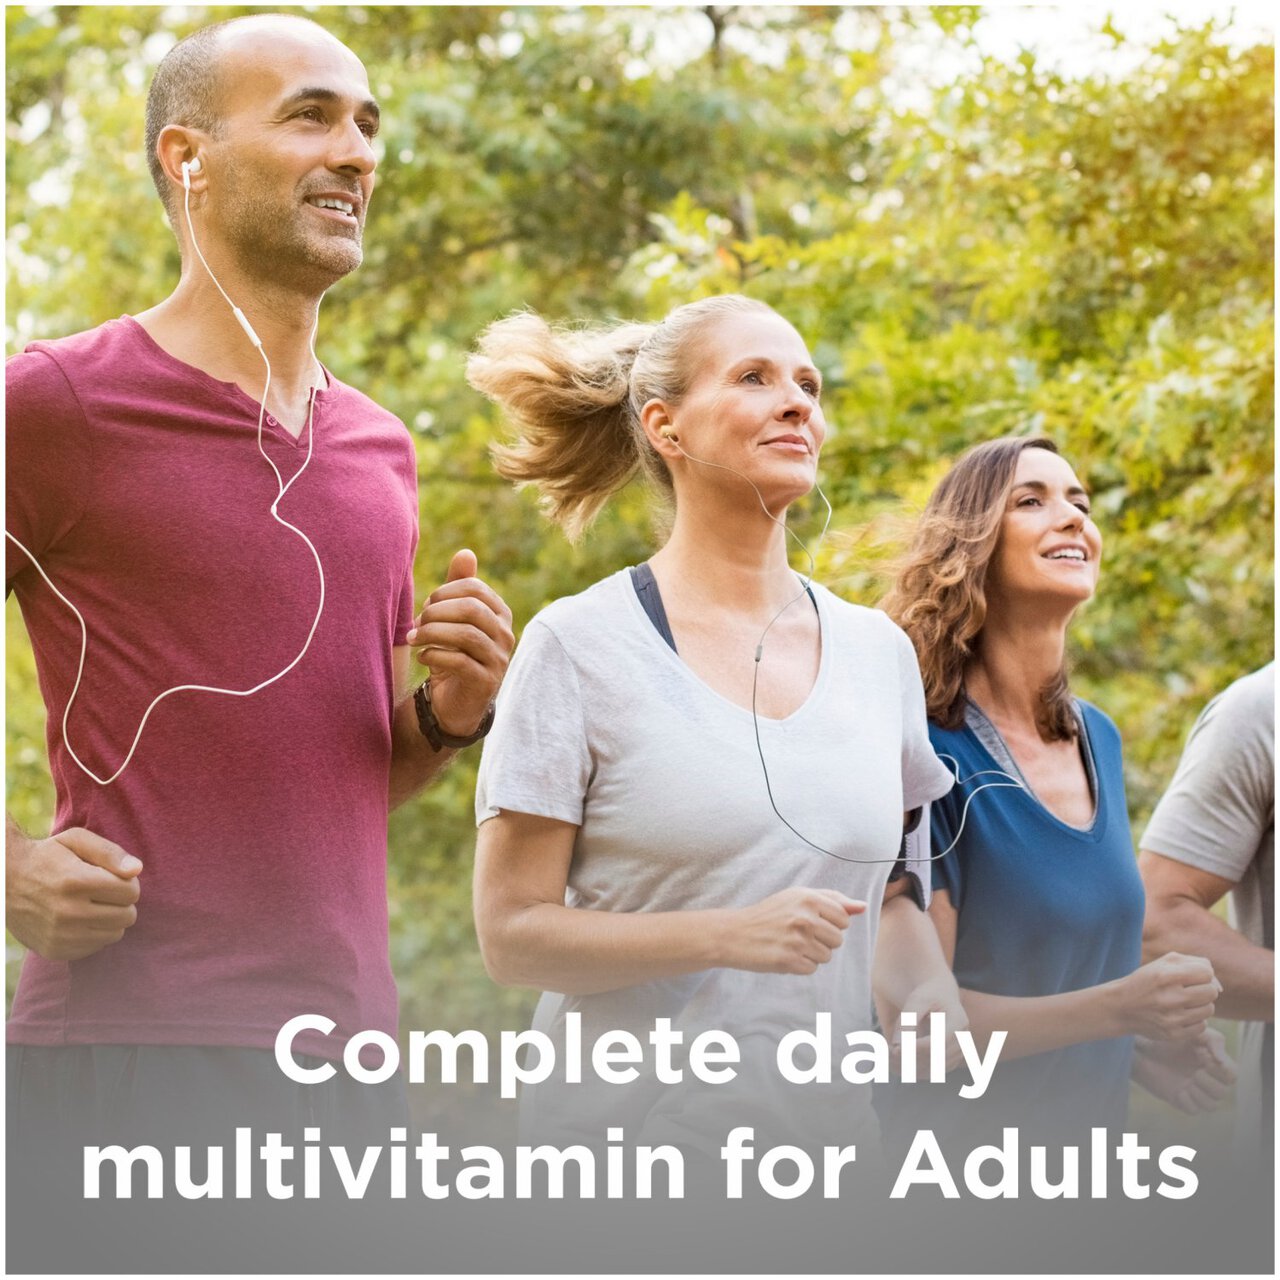 Centrum Advance Multivitamin Supplement Tablets 30 per pack